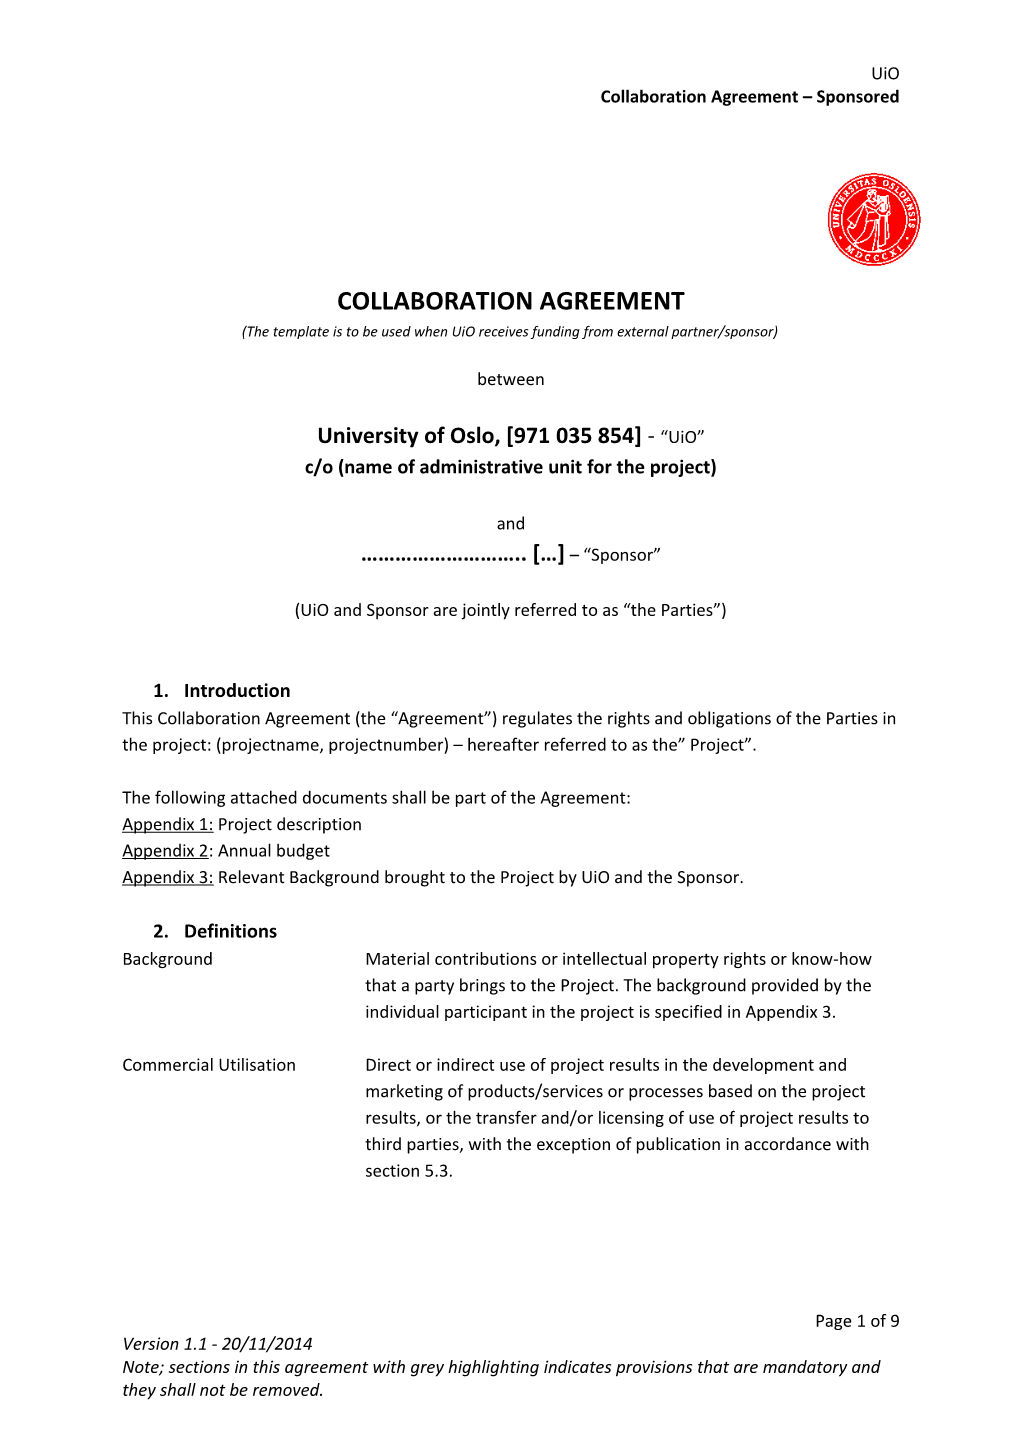 Collaboration Agreement Sponsored